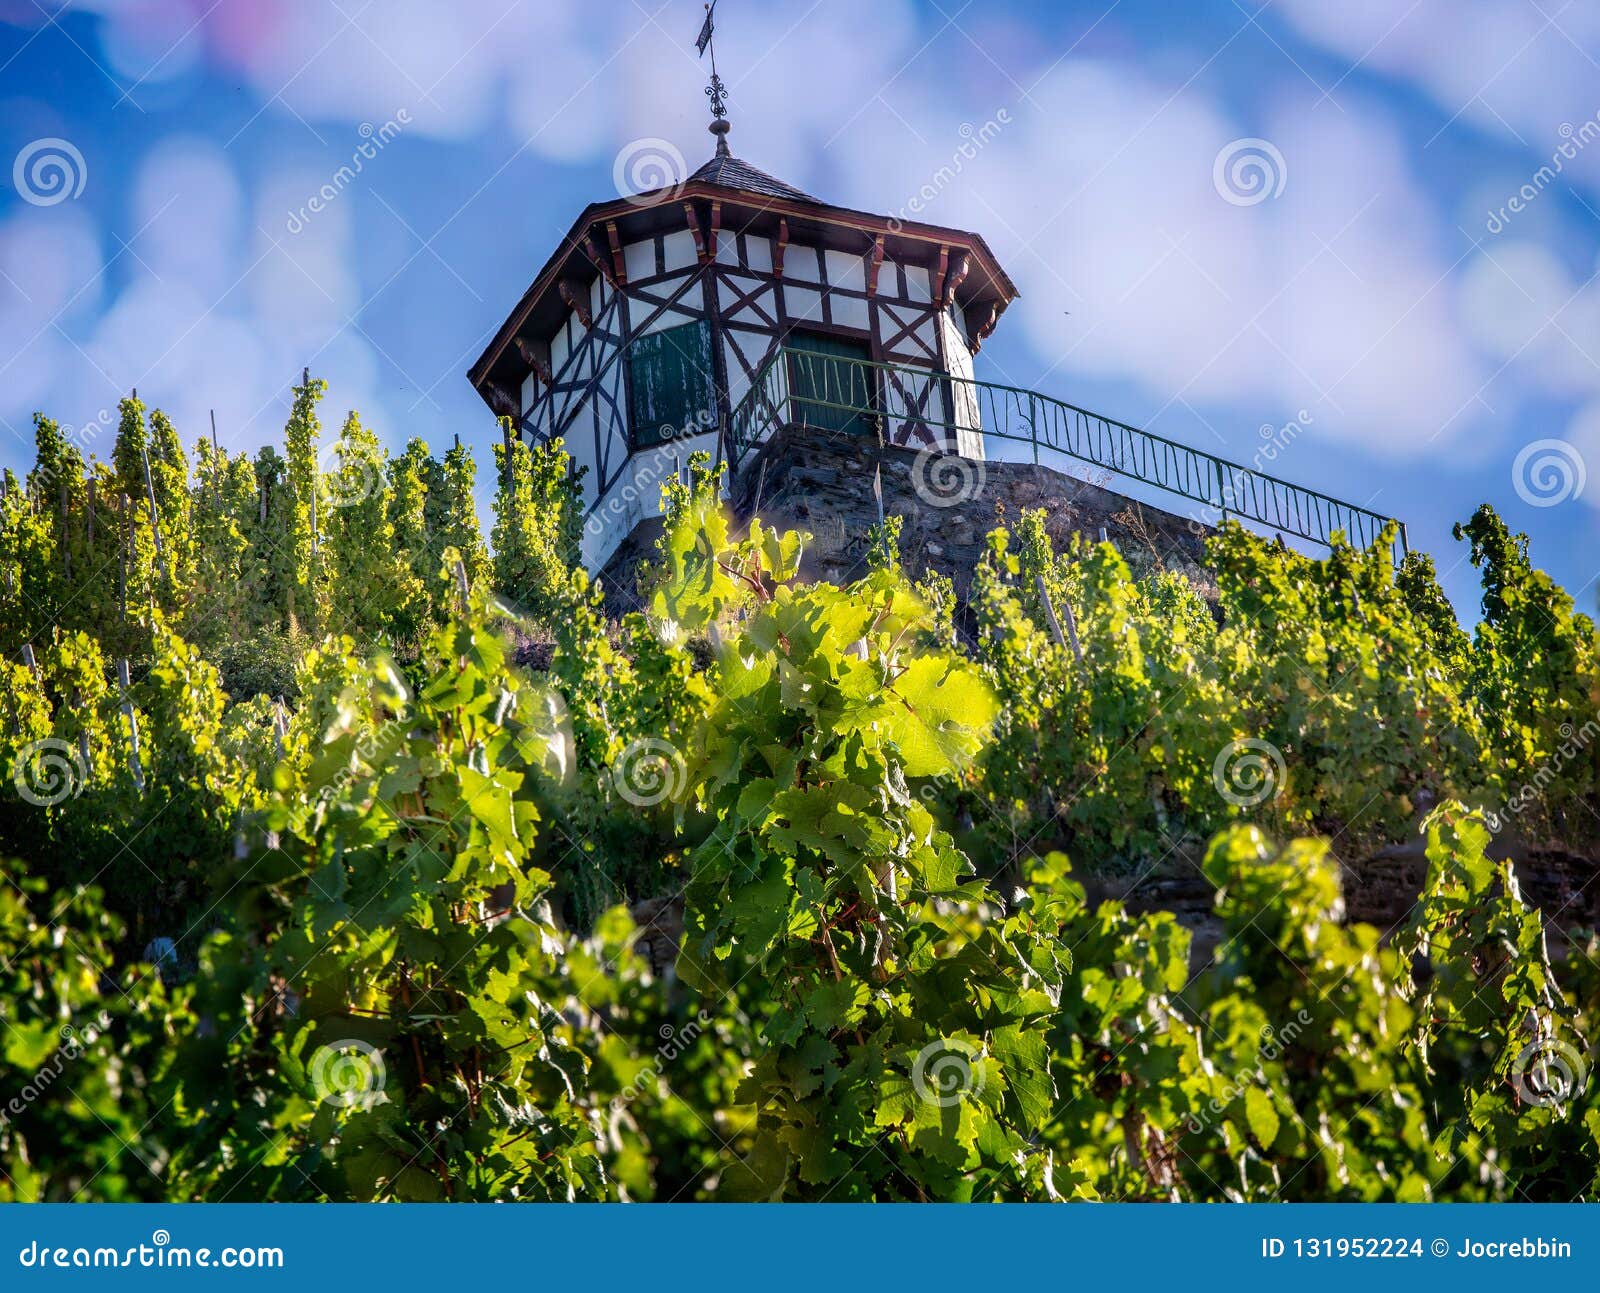 wine growers field house next to field of grape vines in bernkastel,